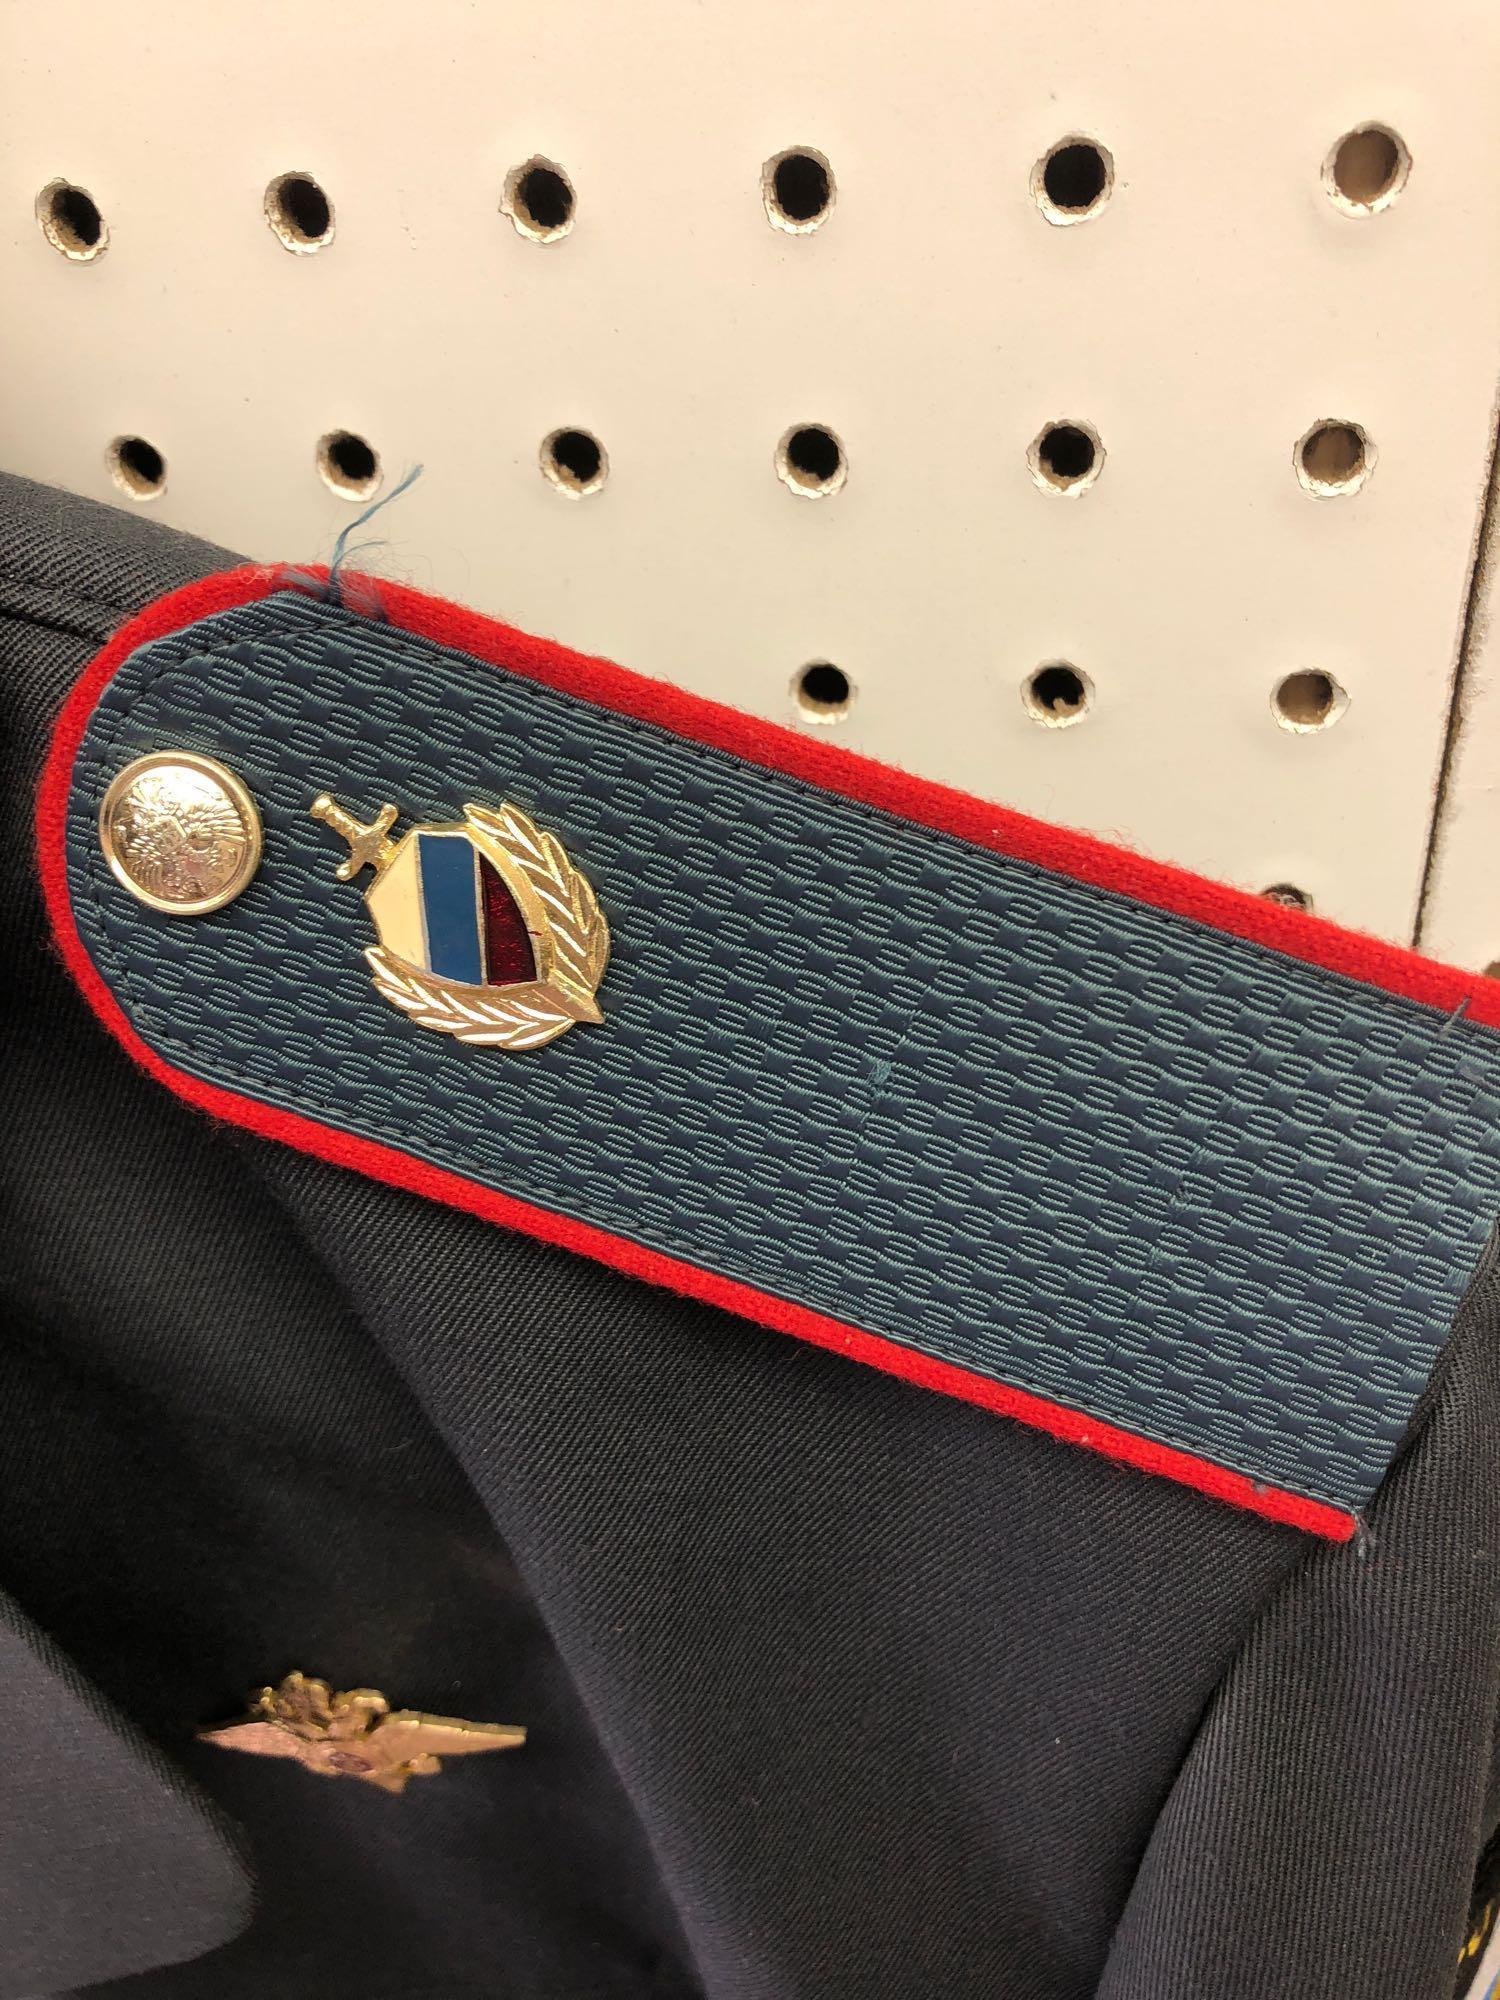 Vintage SOVIET UNION POLICE uniform/hat